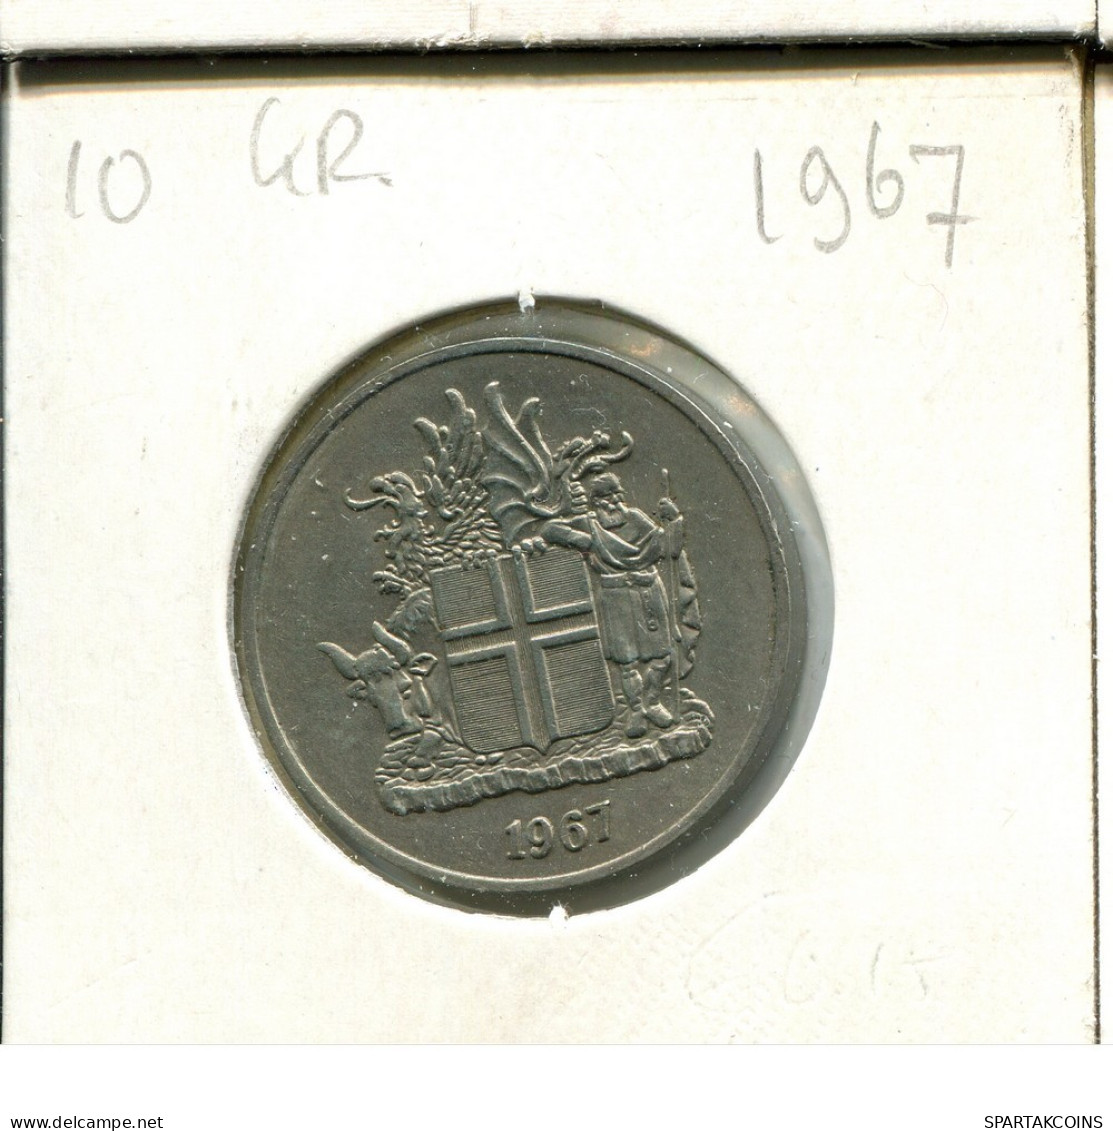 10 KRONUR 1967 ICELAND Coin #AT070.U.A - Island